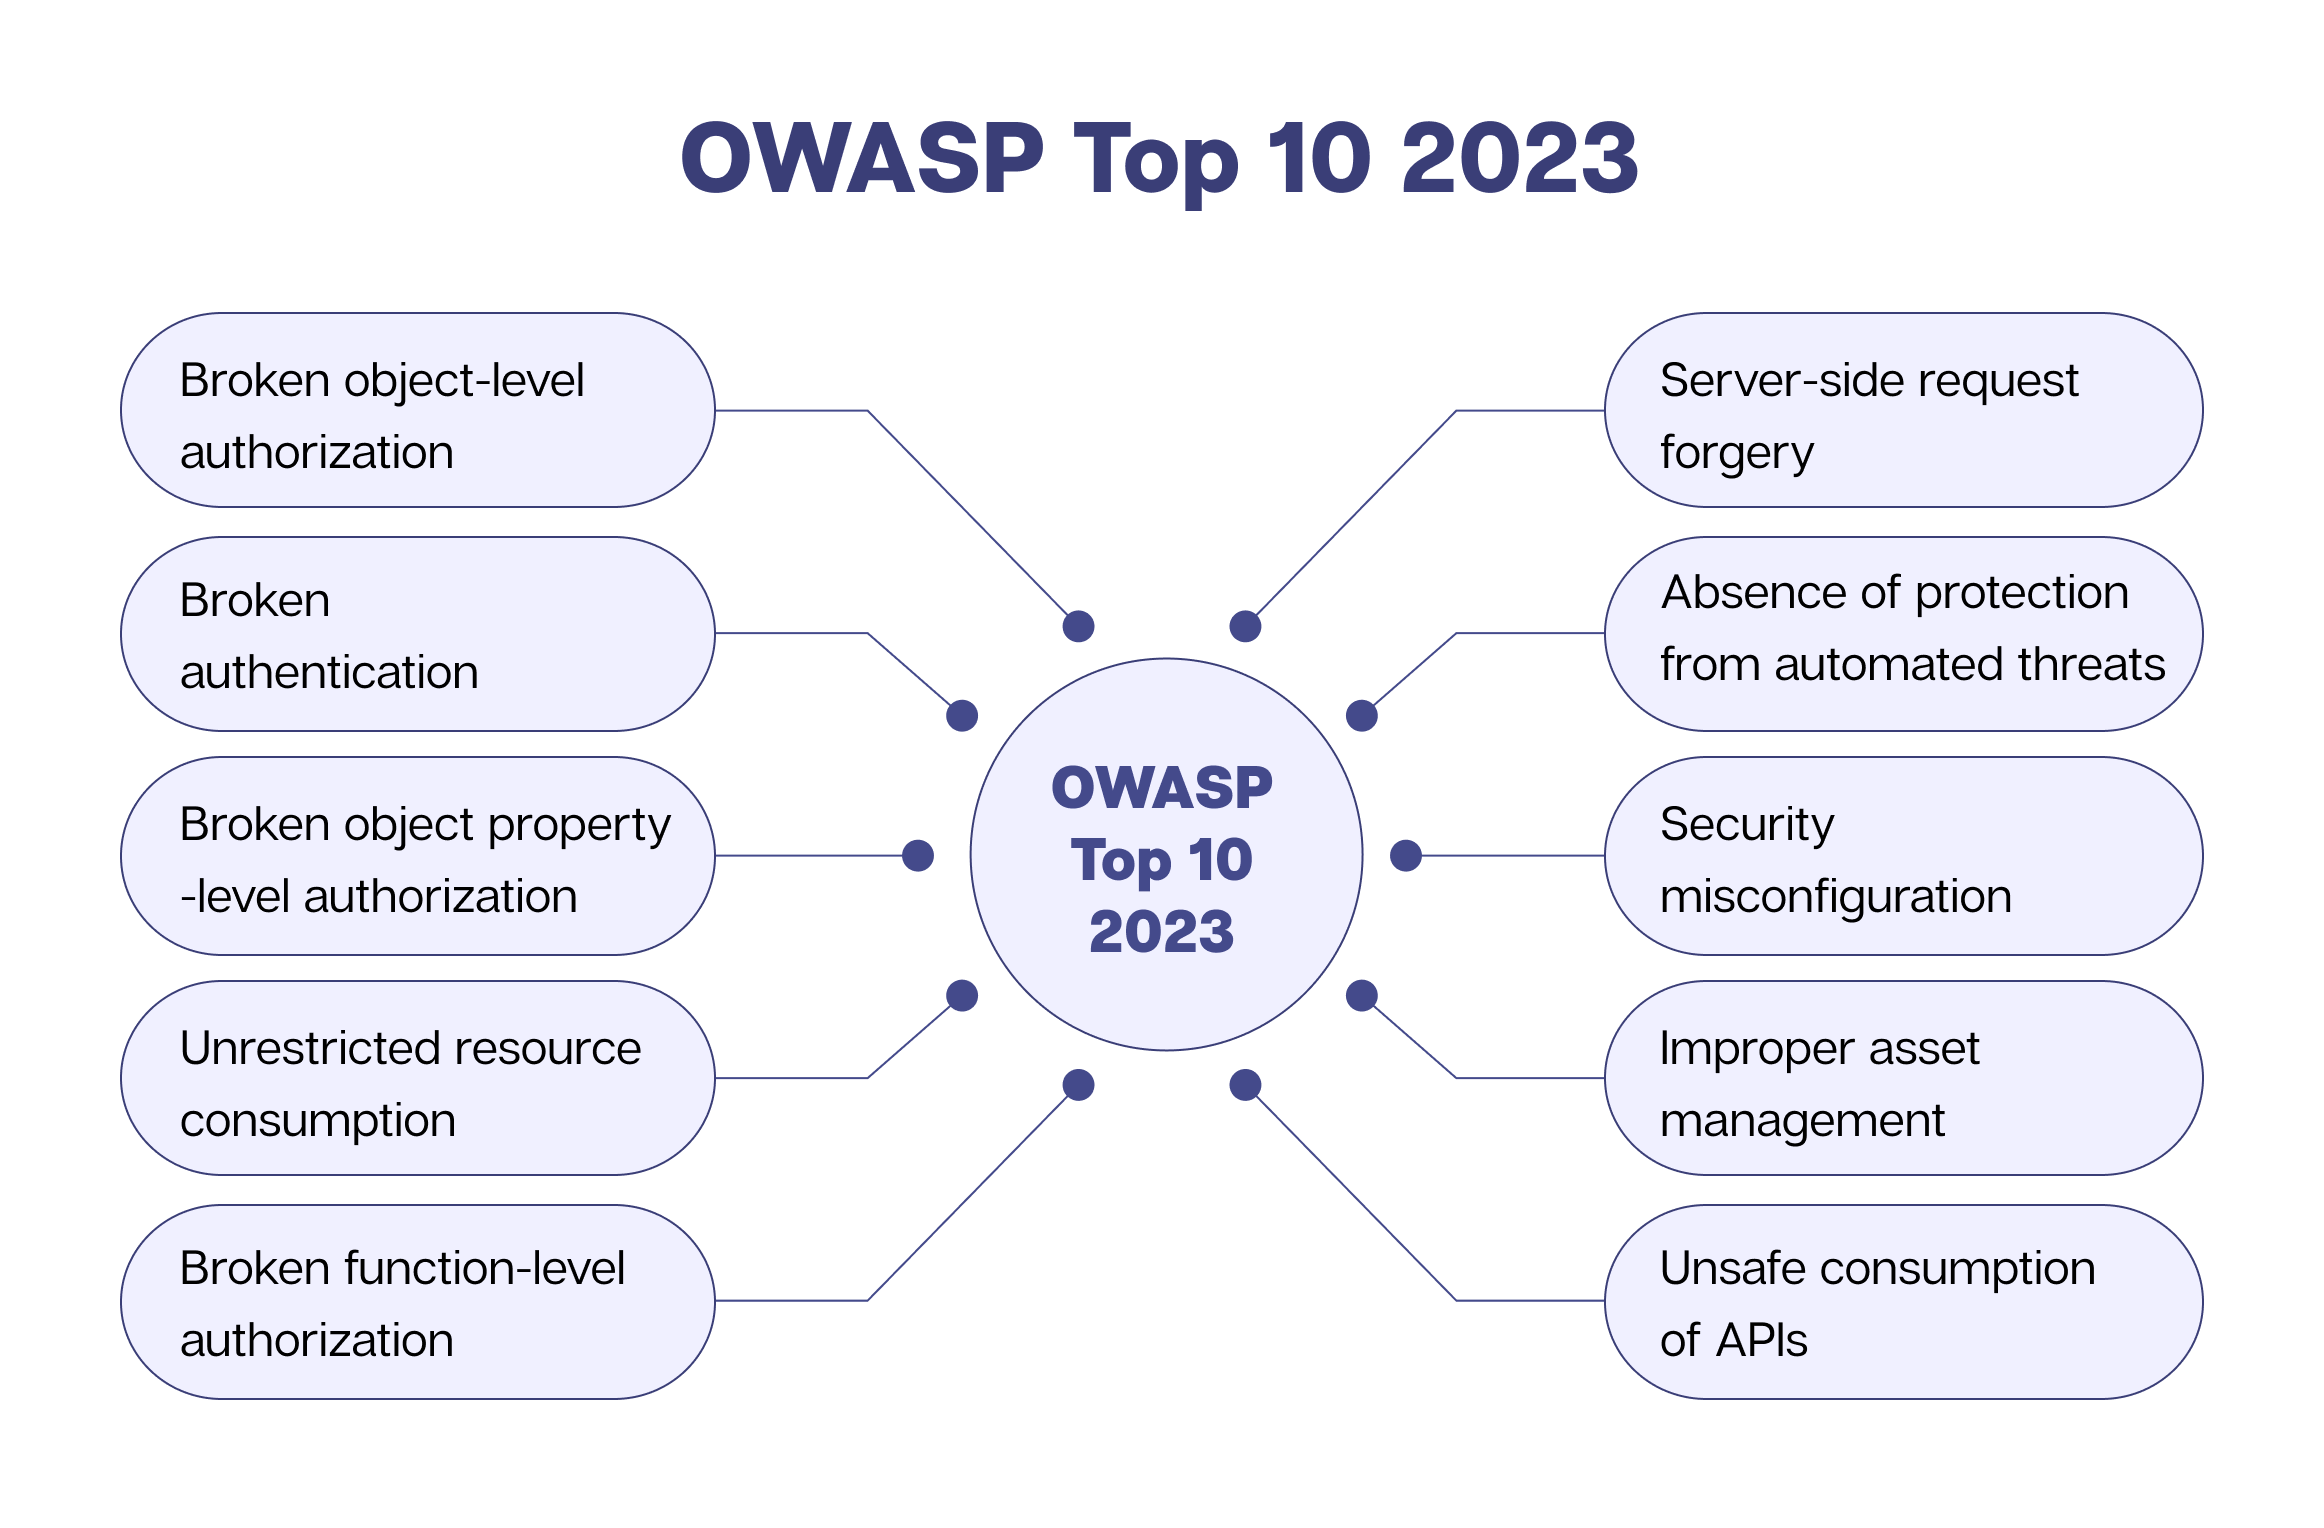 OWASP Top 10 Vulnerabilities 2023 List